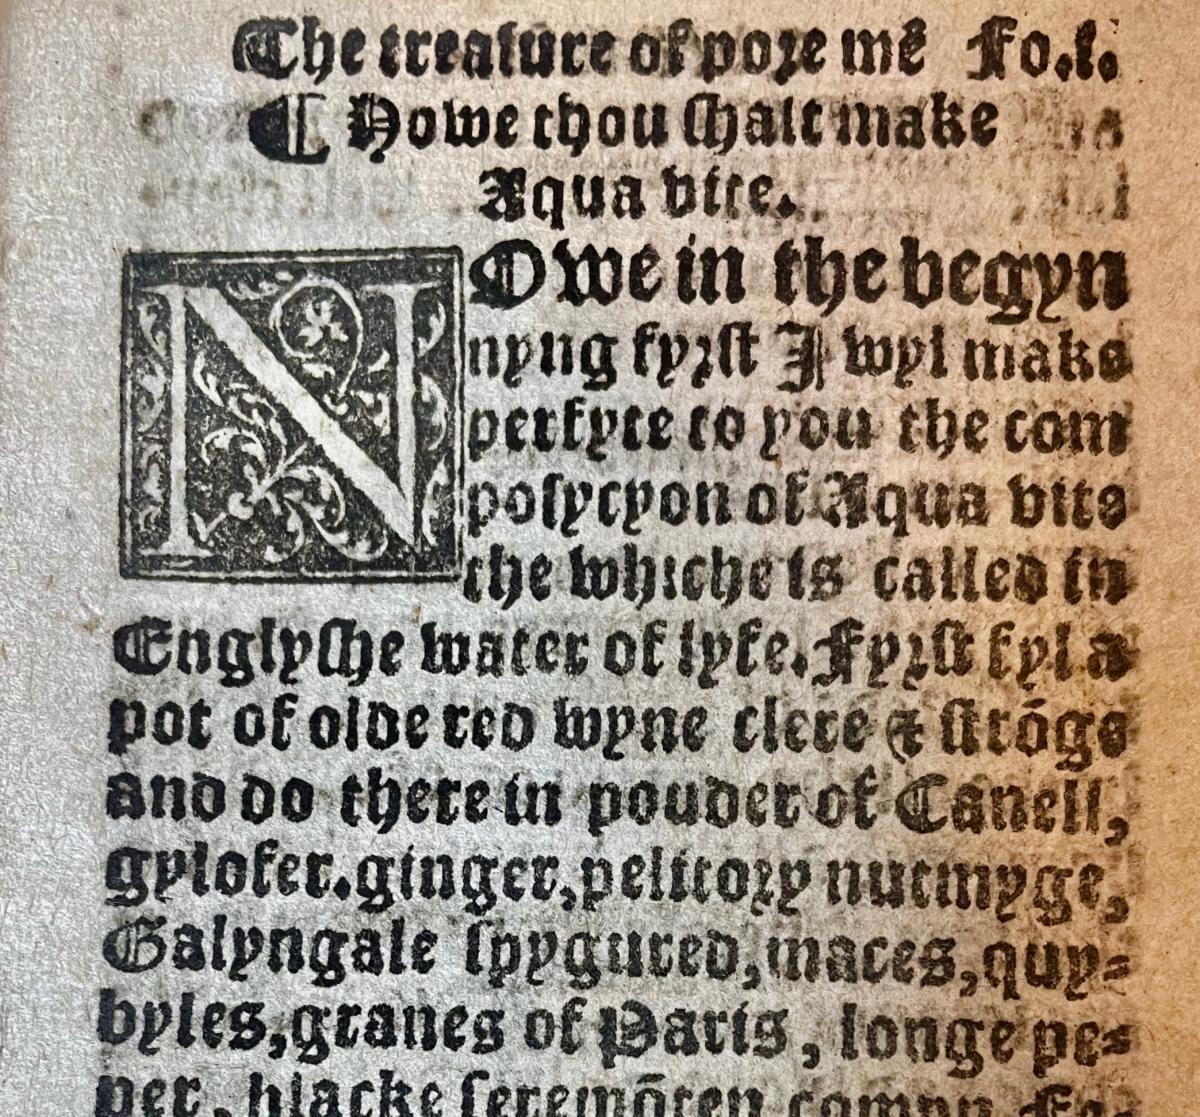 A 16th century vellum bound book of herbal remedies